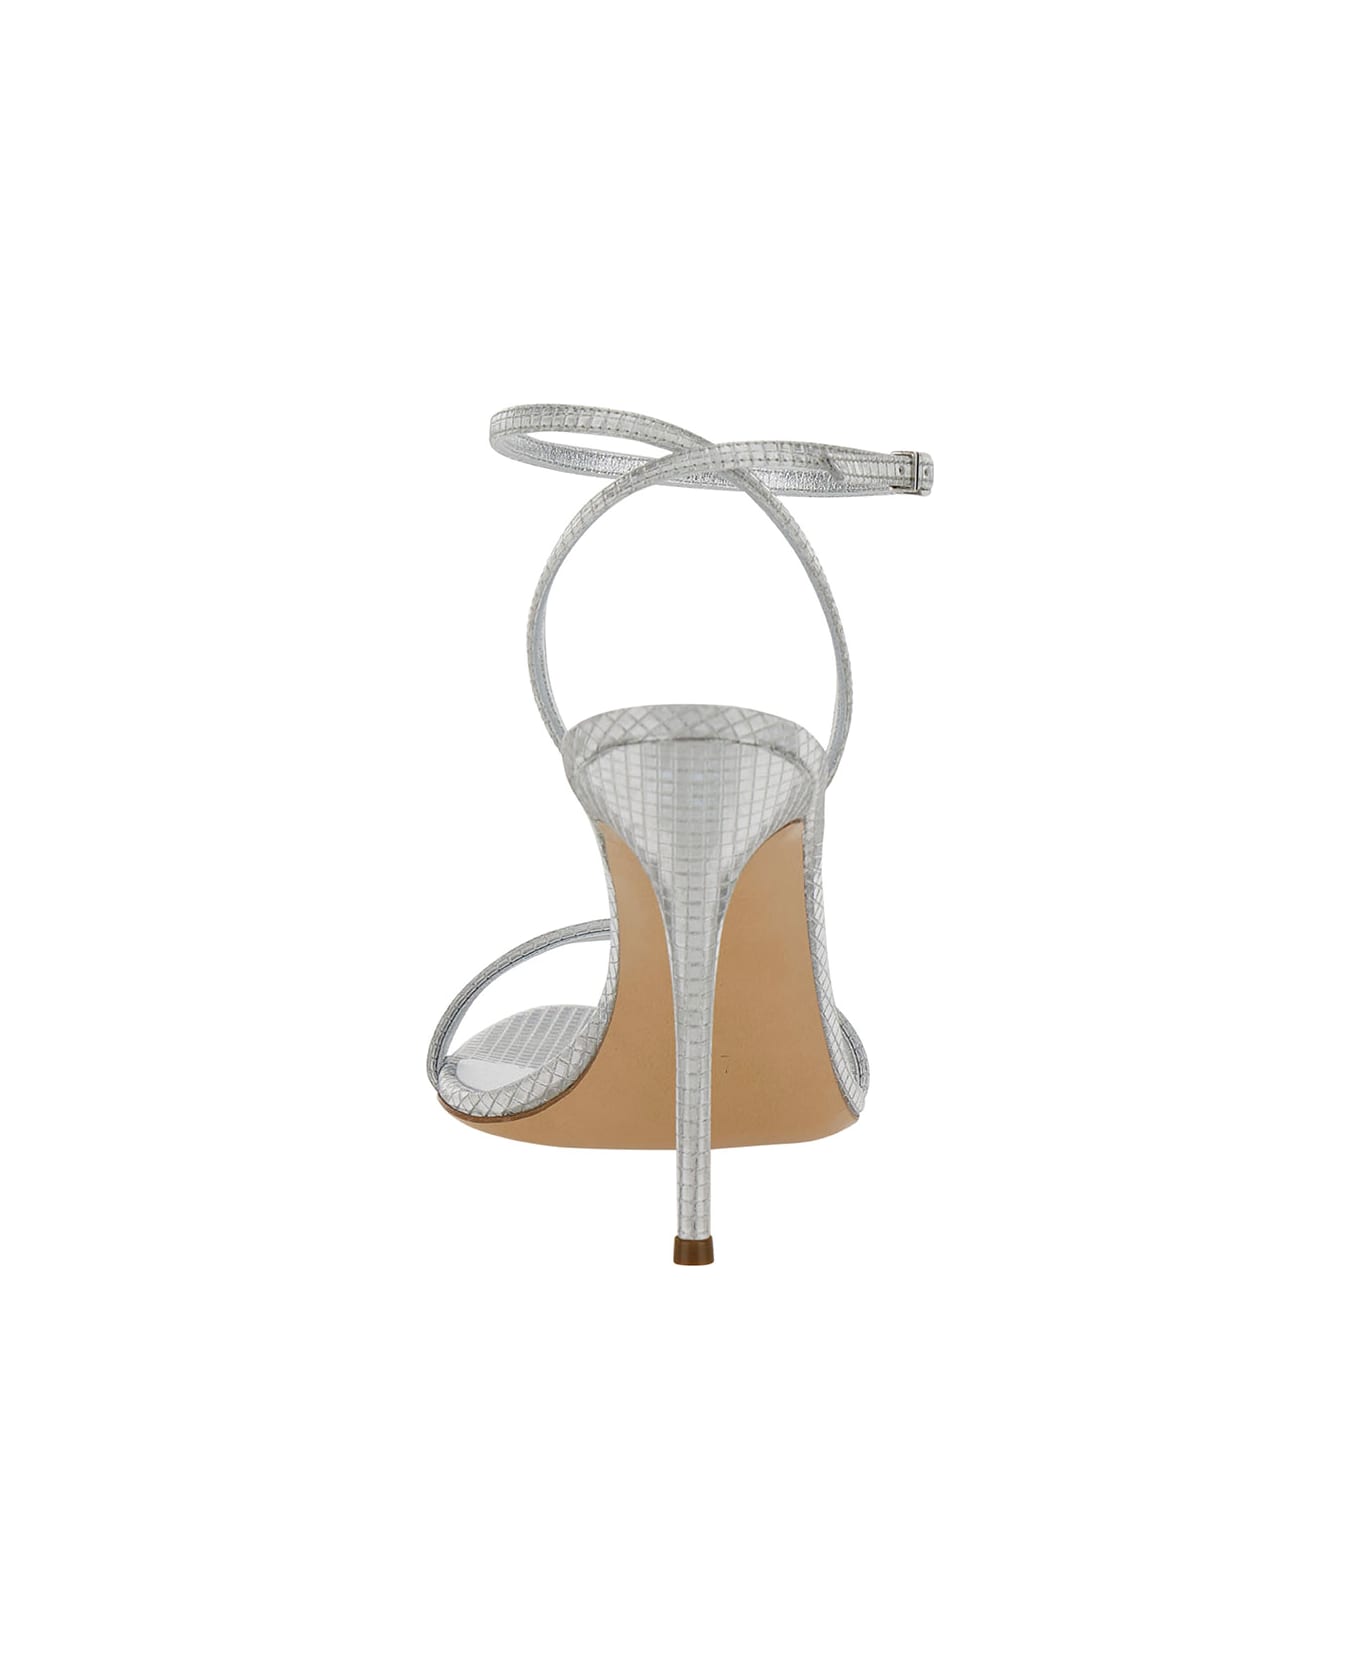 Casadei 'diadema' Silver Sandals With Blade Heel In Metallic Fabric Woman - Metallic